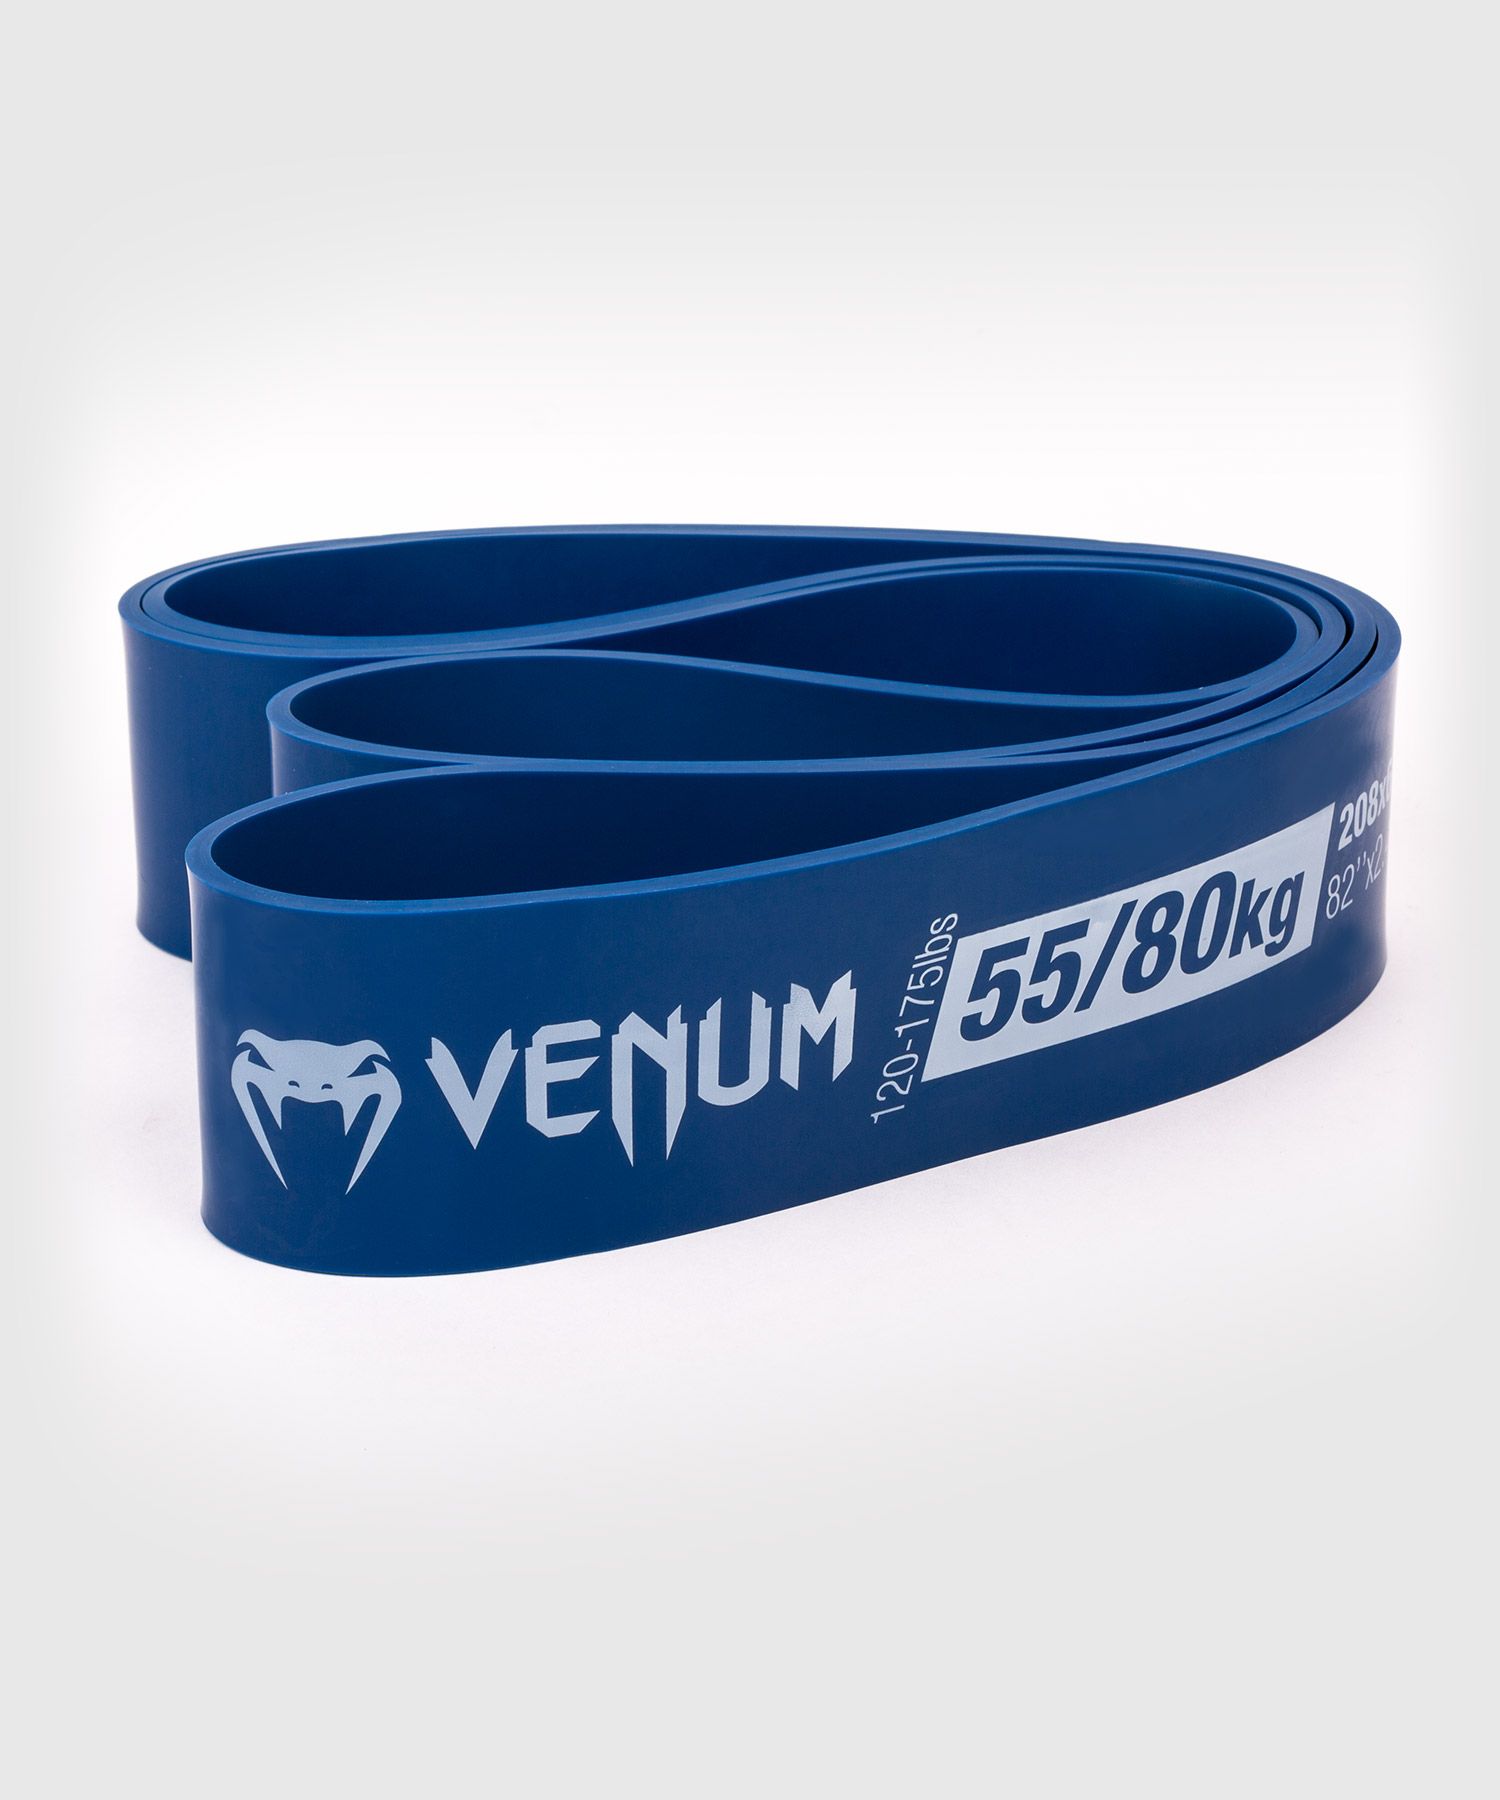 Venum Challenger レジスタンスバンド - ブルー - 55-80Kg